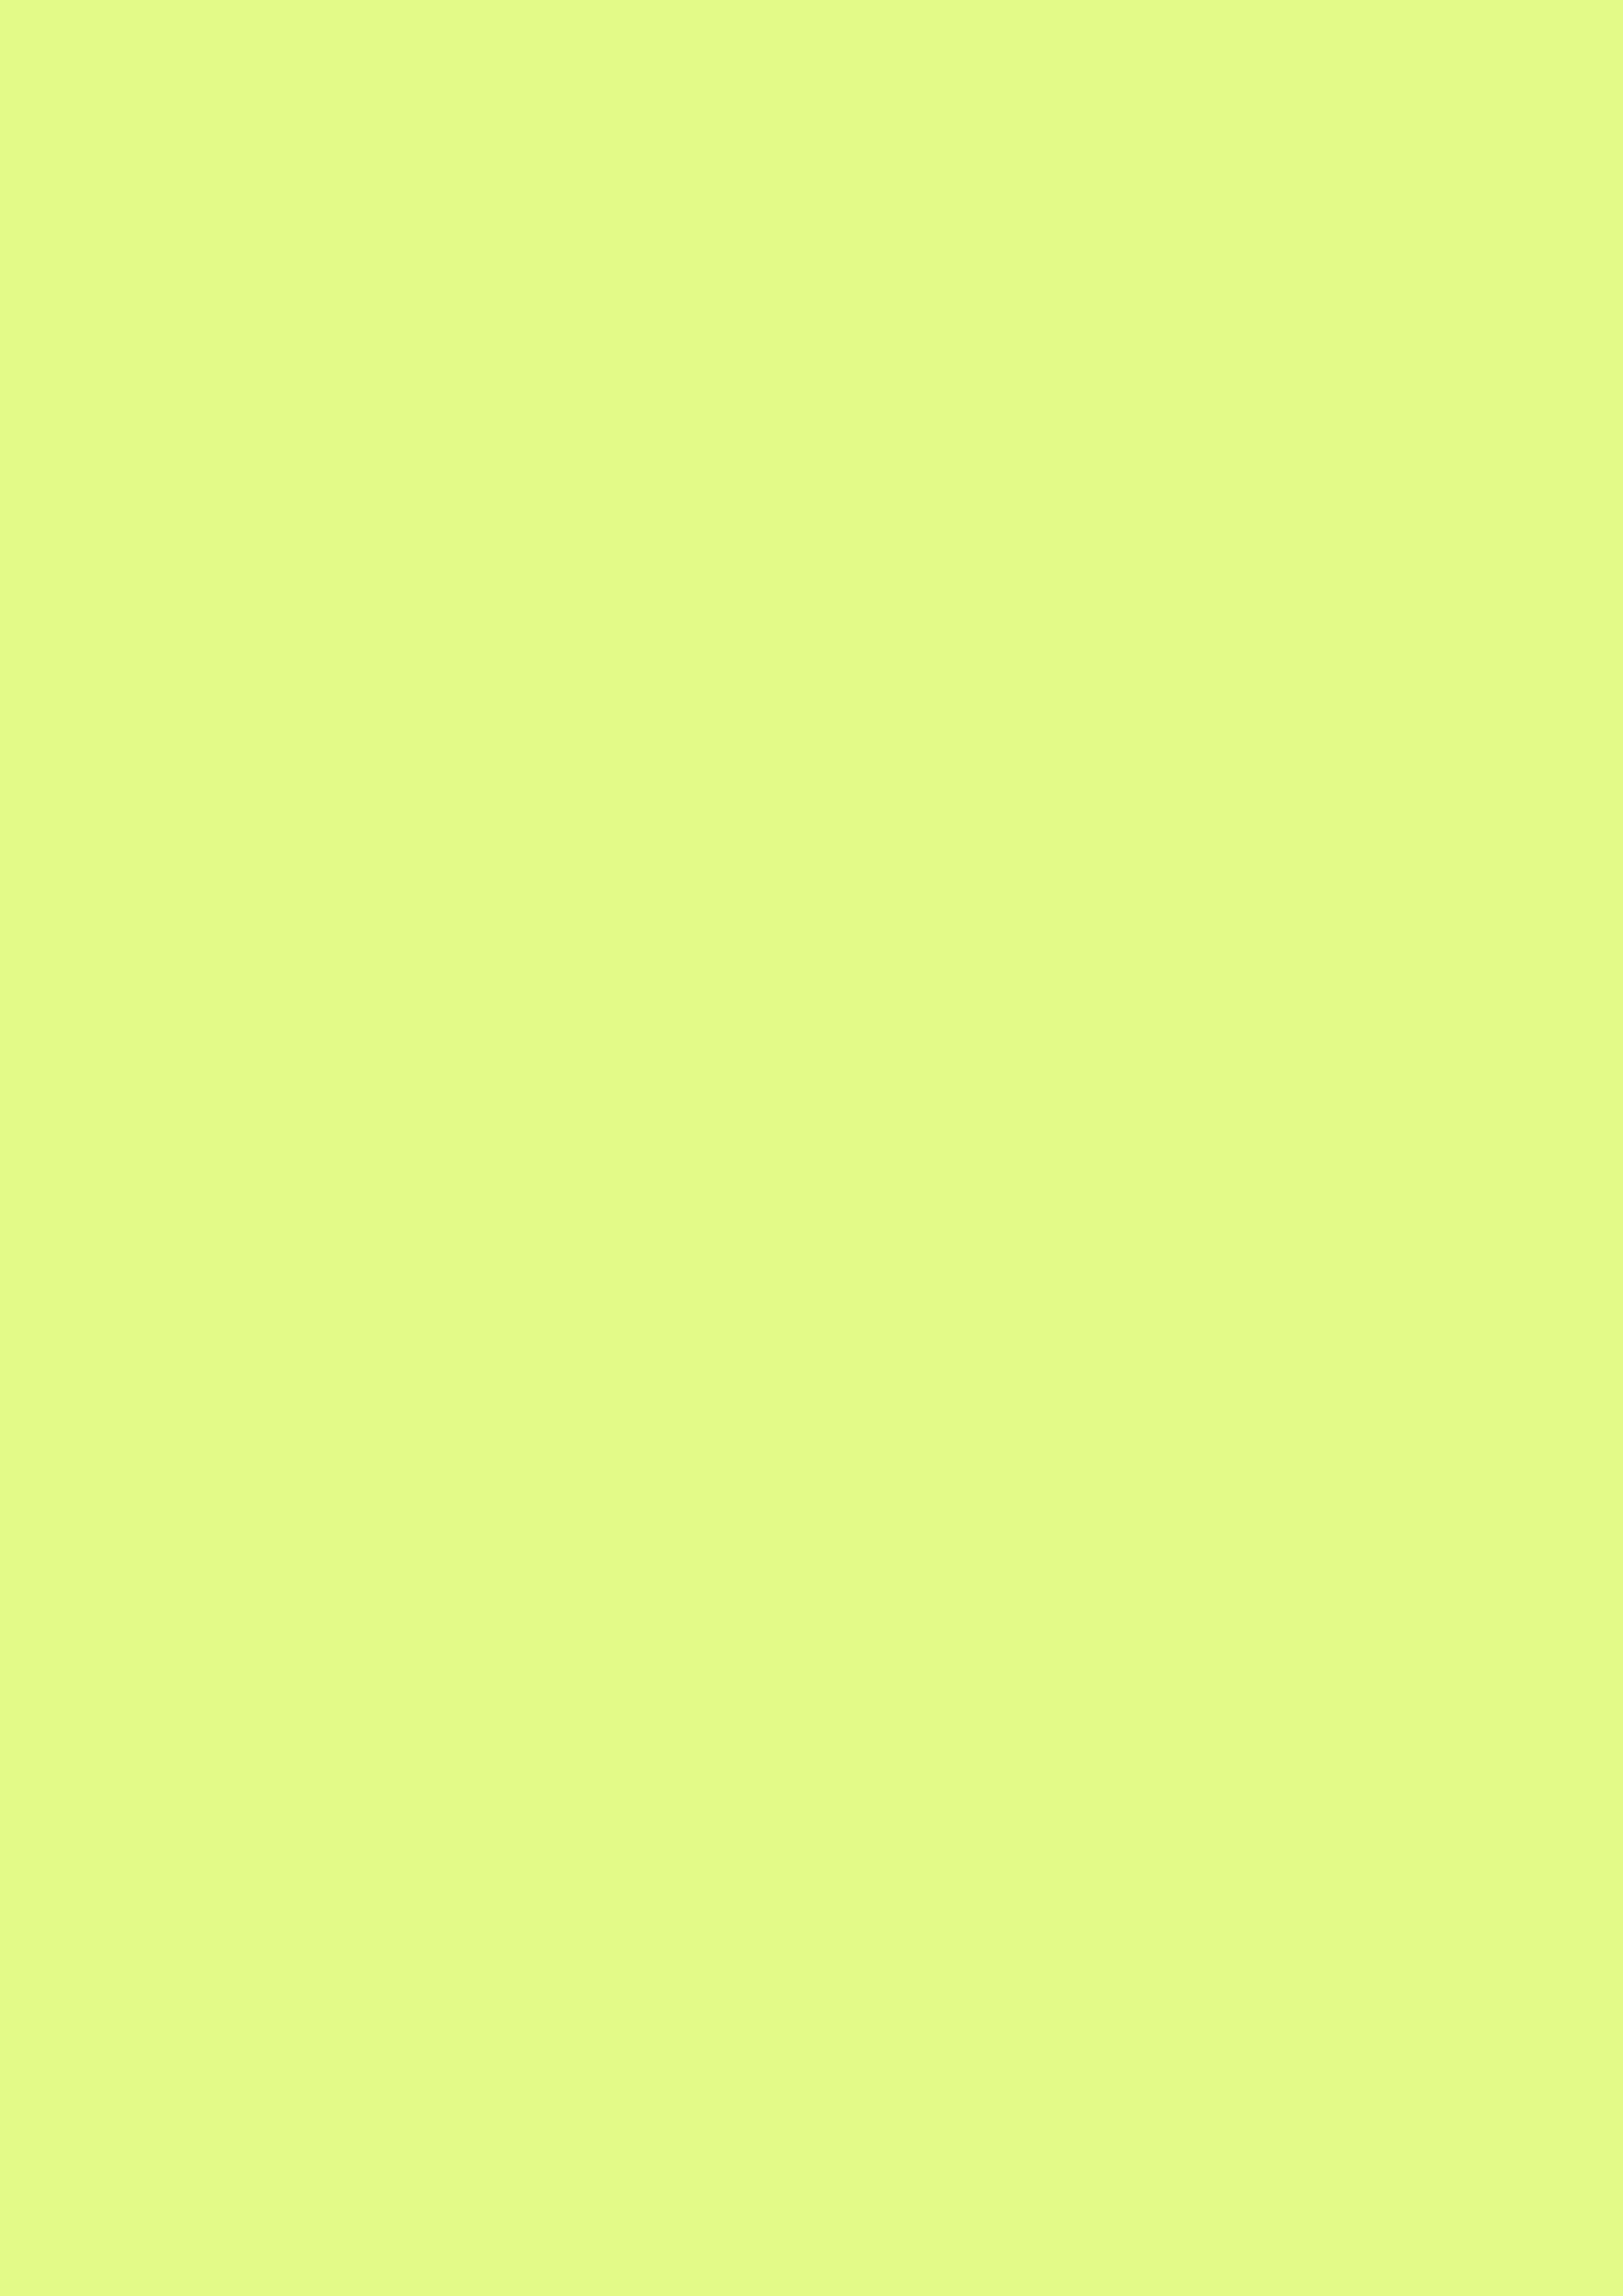 2480x3508 Midori Solid Color Background